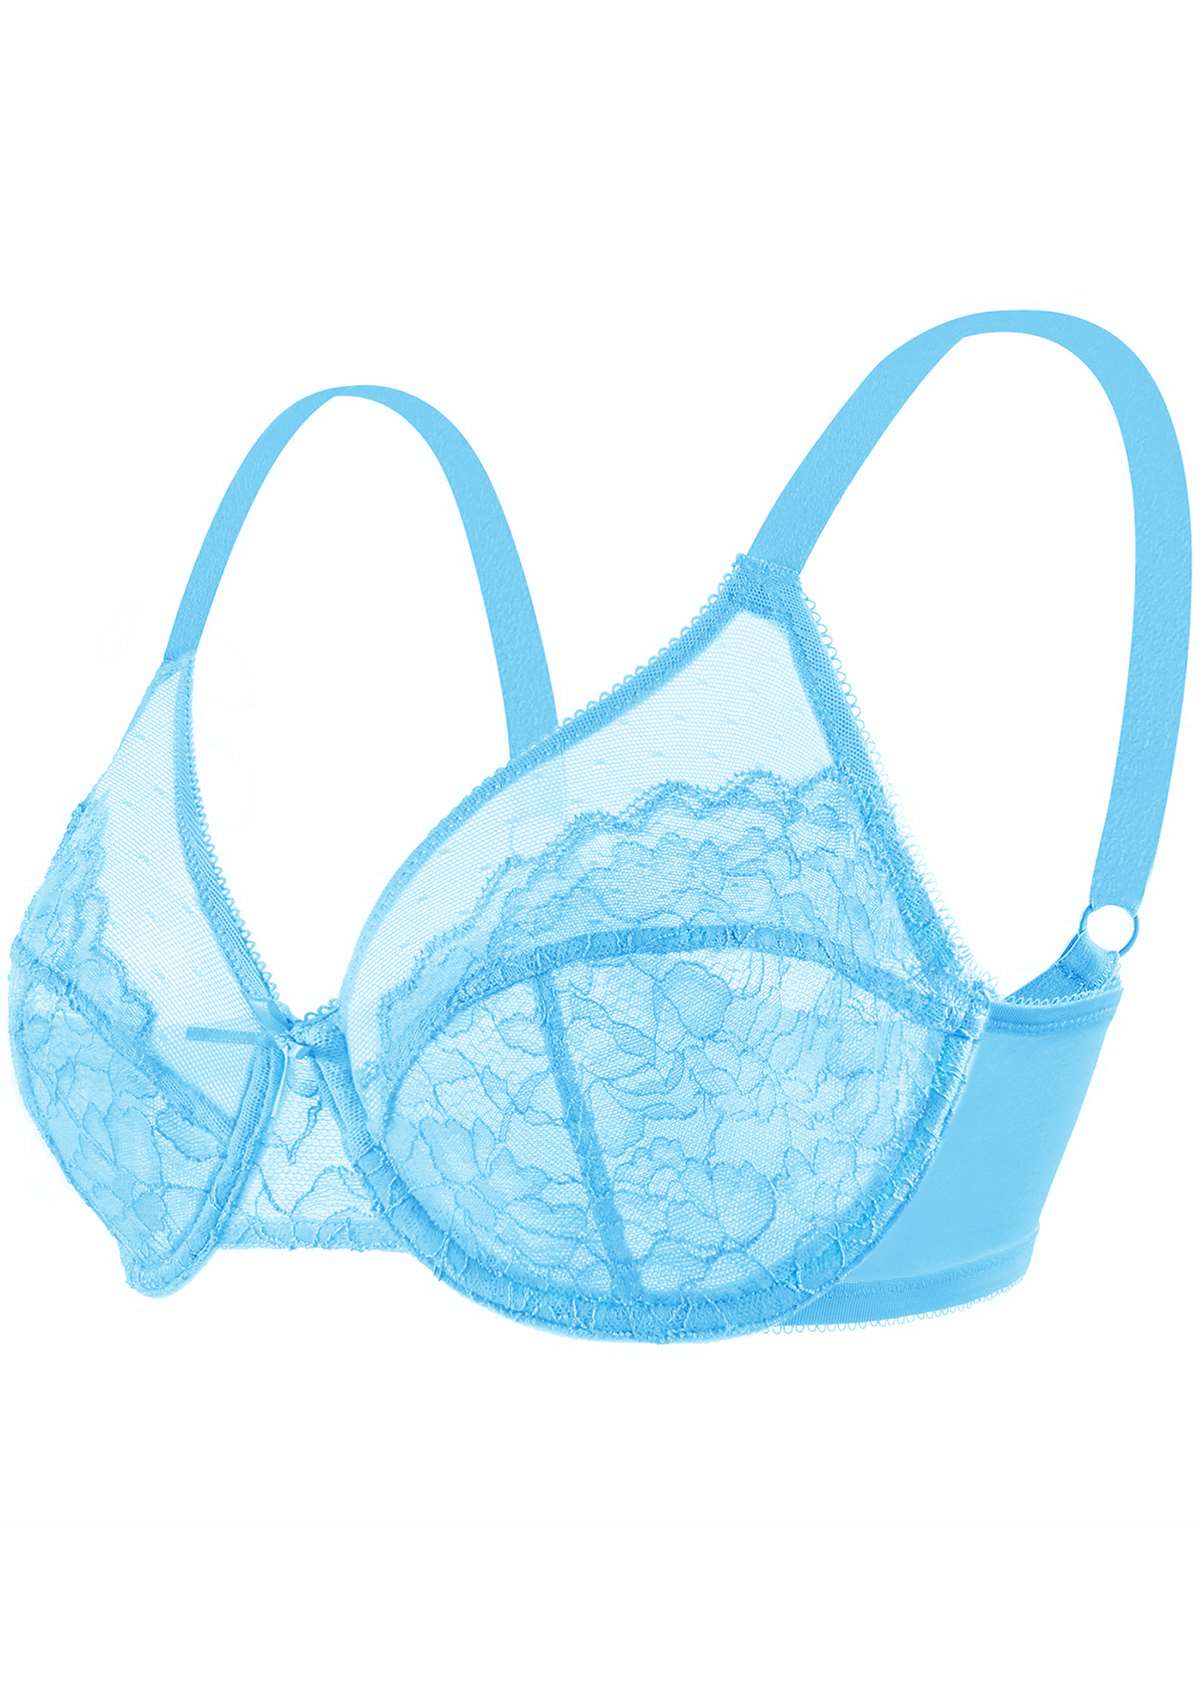 HSIA Enchante Minimizer Lace Bra: Full Support For Heavy Breasts - Capri Blue / 36 / I